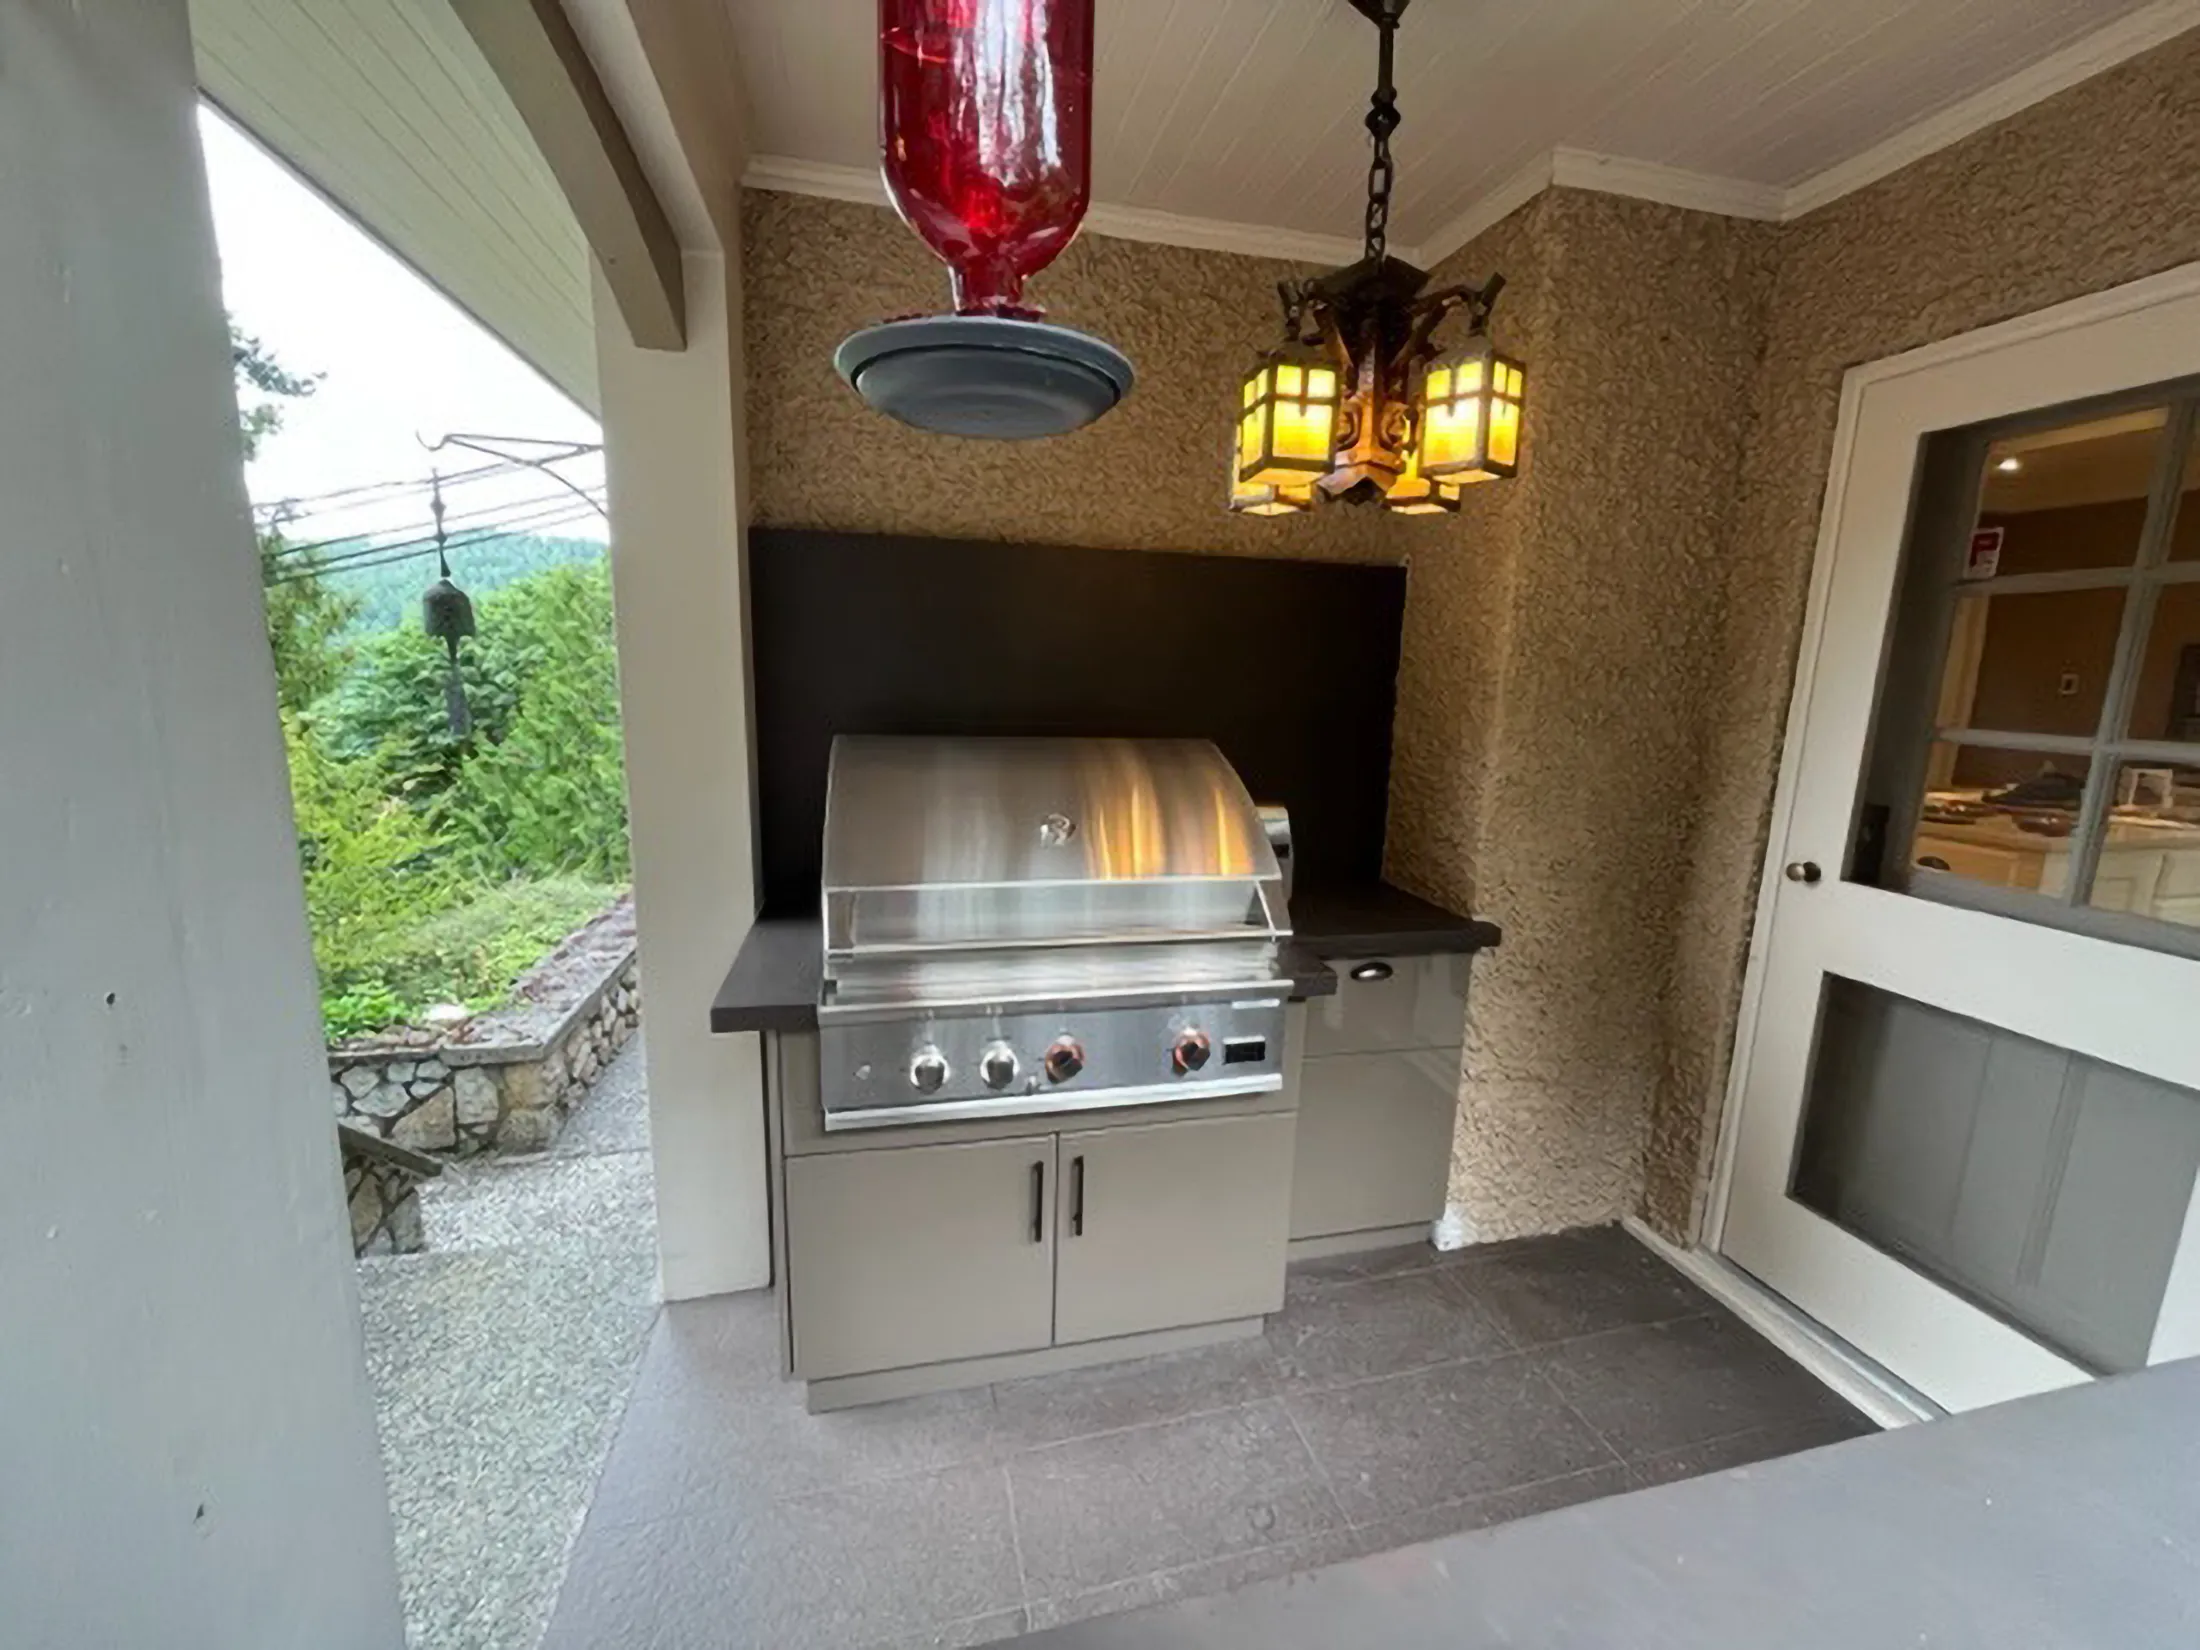 Outdoor kitchen design 2 by Silver Fern Stainless